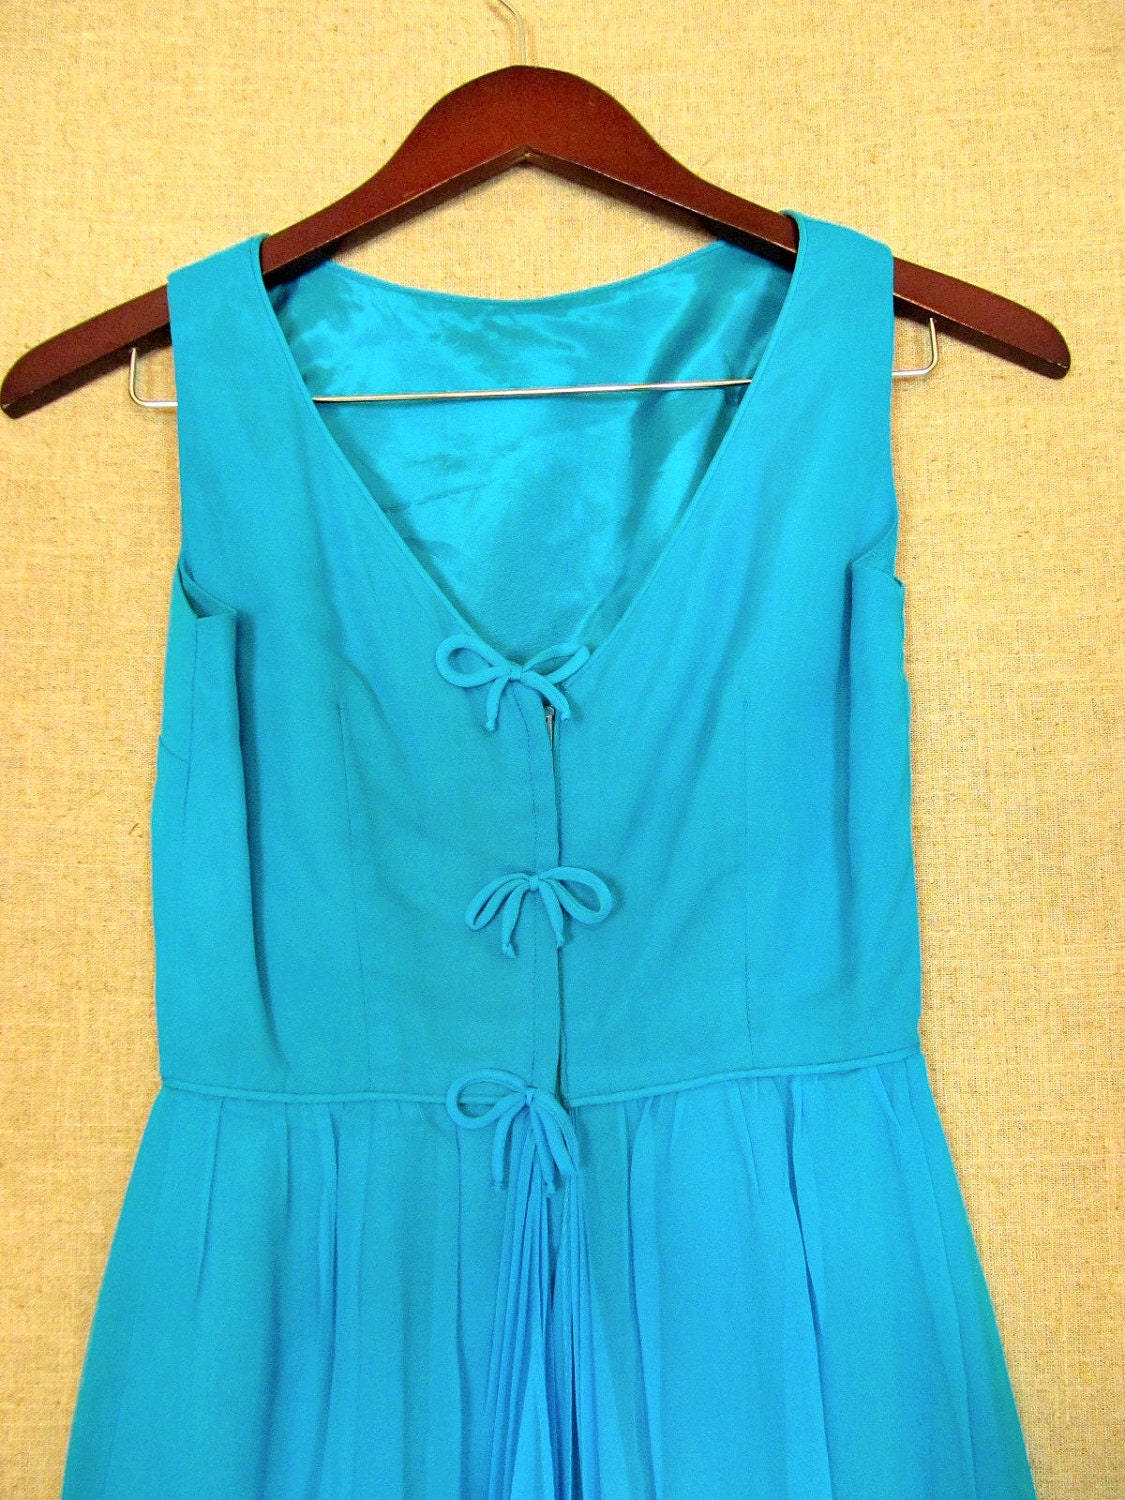 SALE Vintage 1960s Dress / 60s Turquoise Blue Chiffon - Etsy